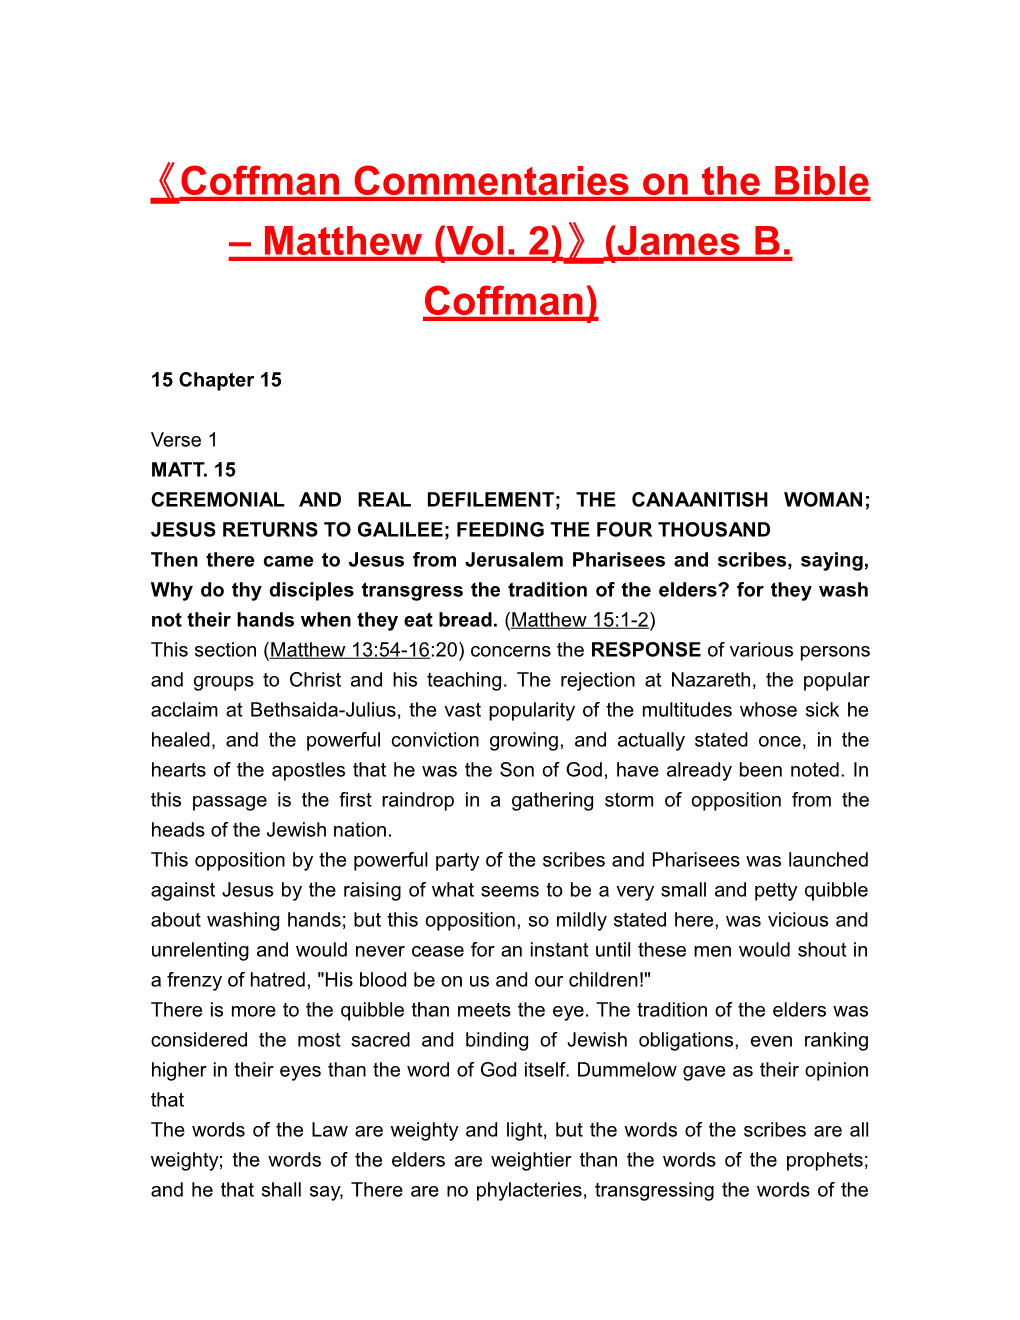 Coffman Commentaries on the Bible Matthew (Vol. 2) (James B. Coffman)